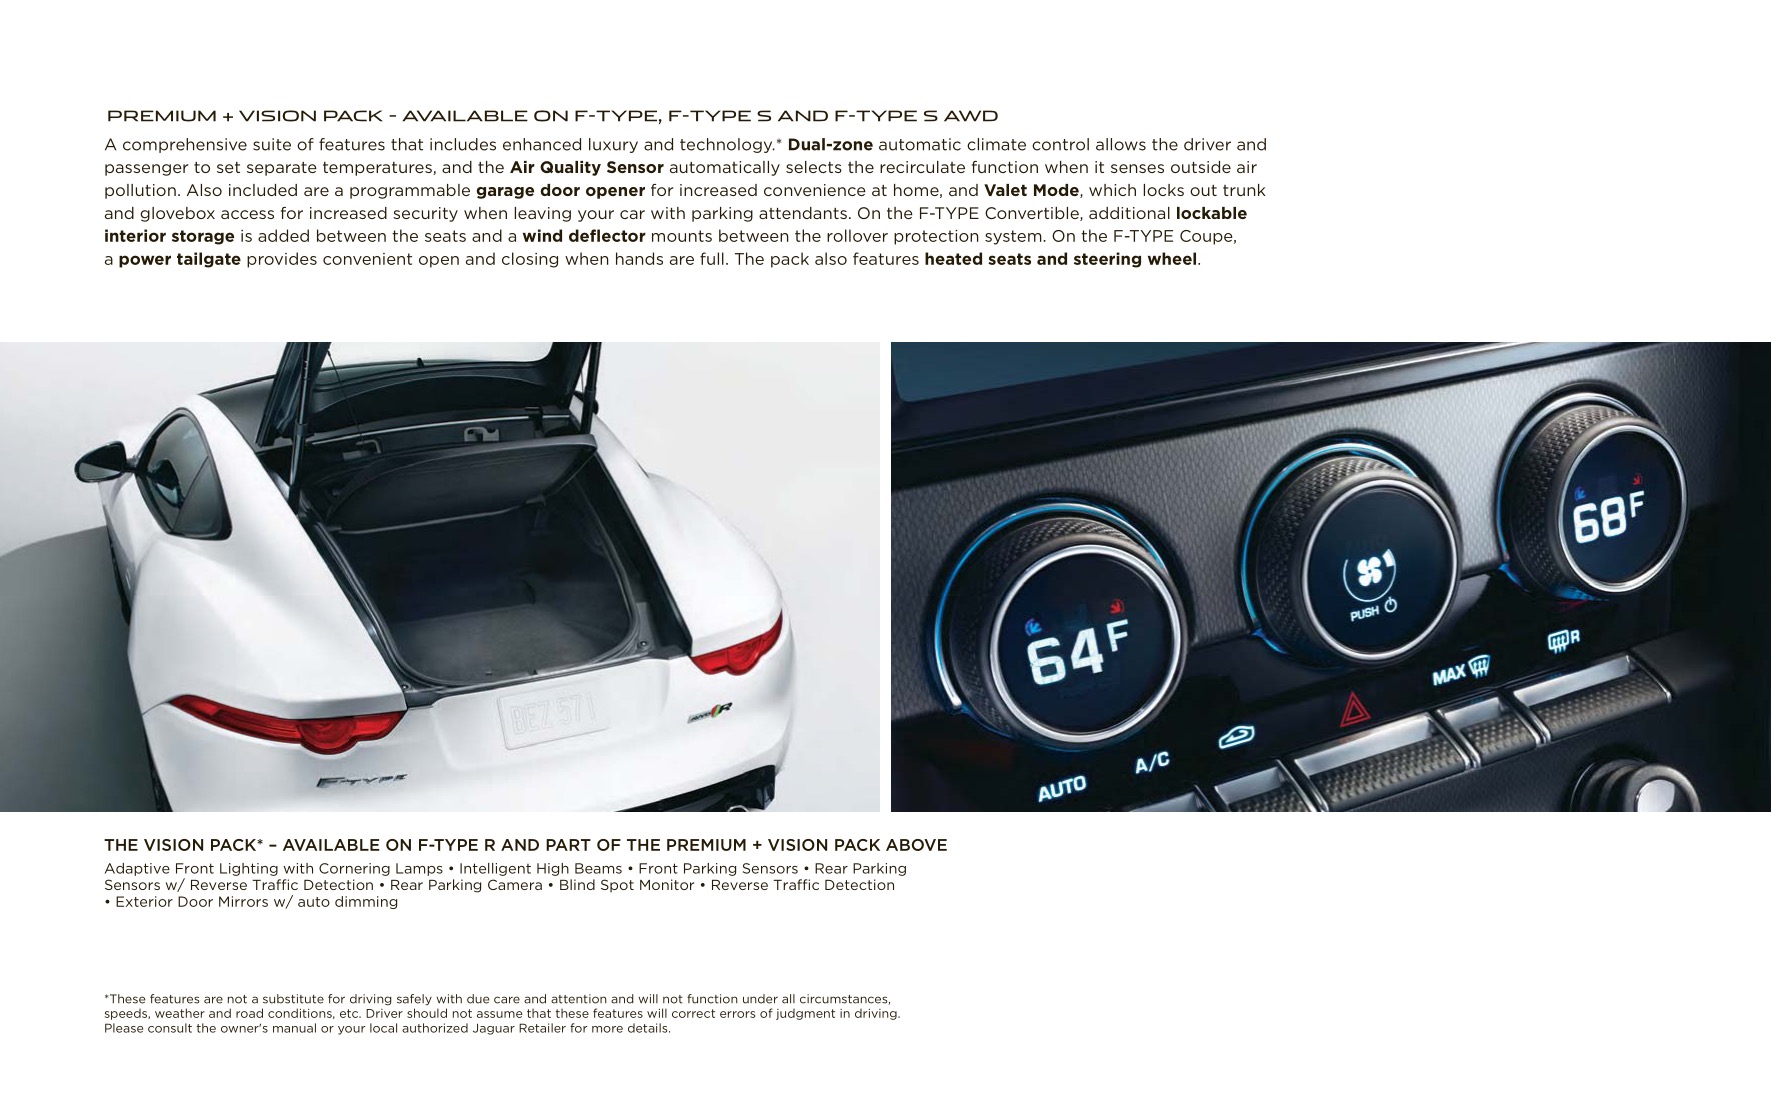 2016 Jaguar F-Type Brochure Page 86